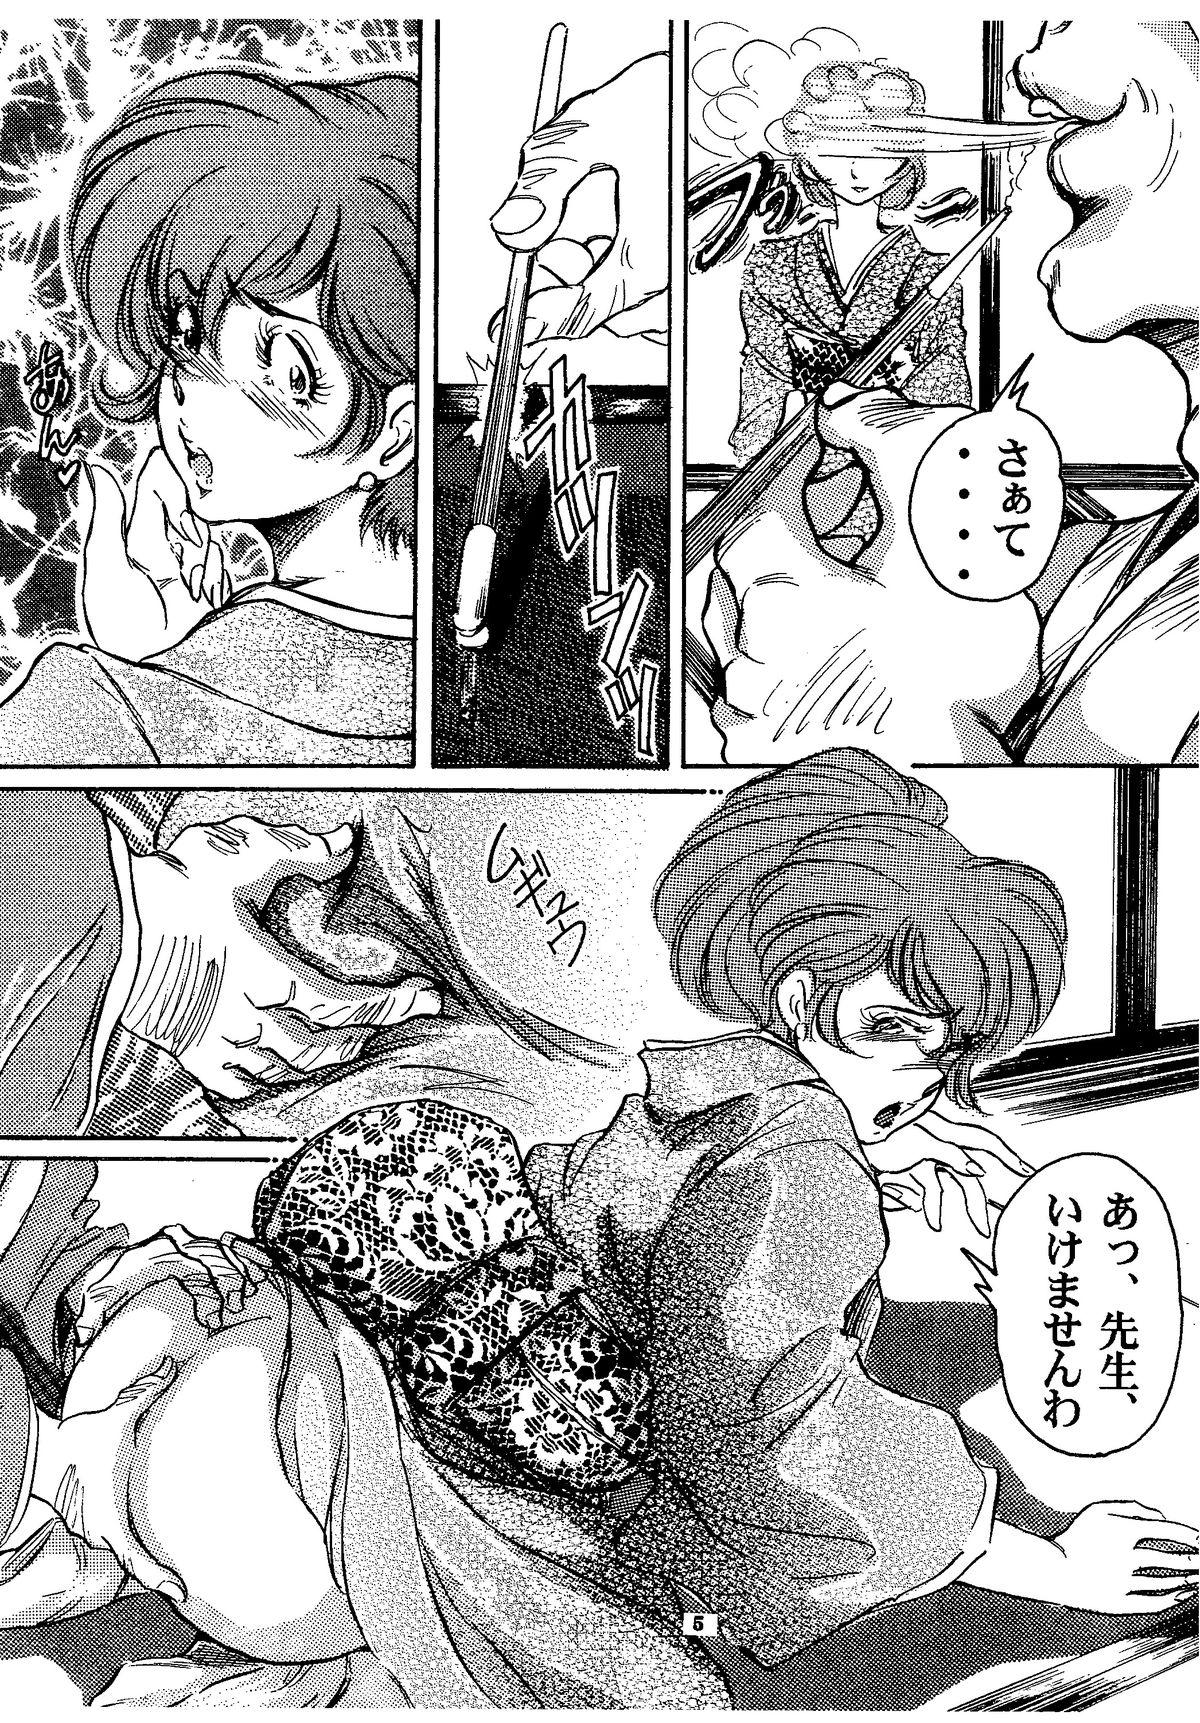 Cavalgando Fujiko ni Omakase - Lupin iii Cavala - Page 4